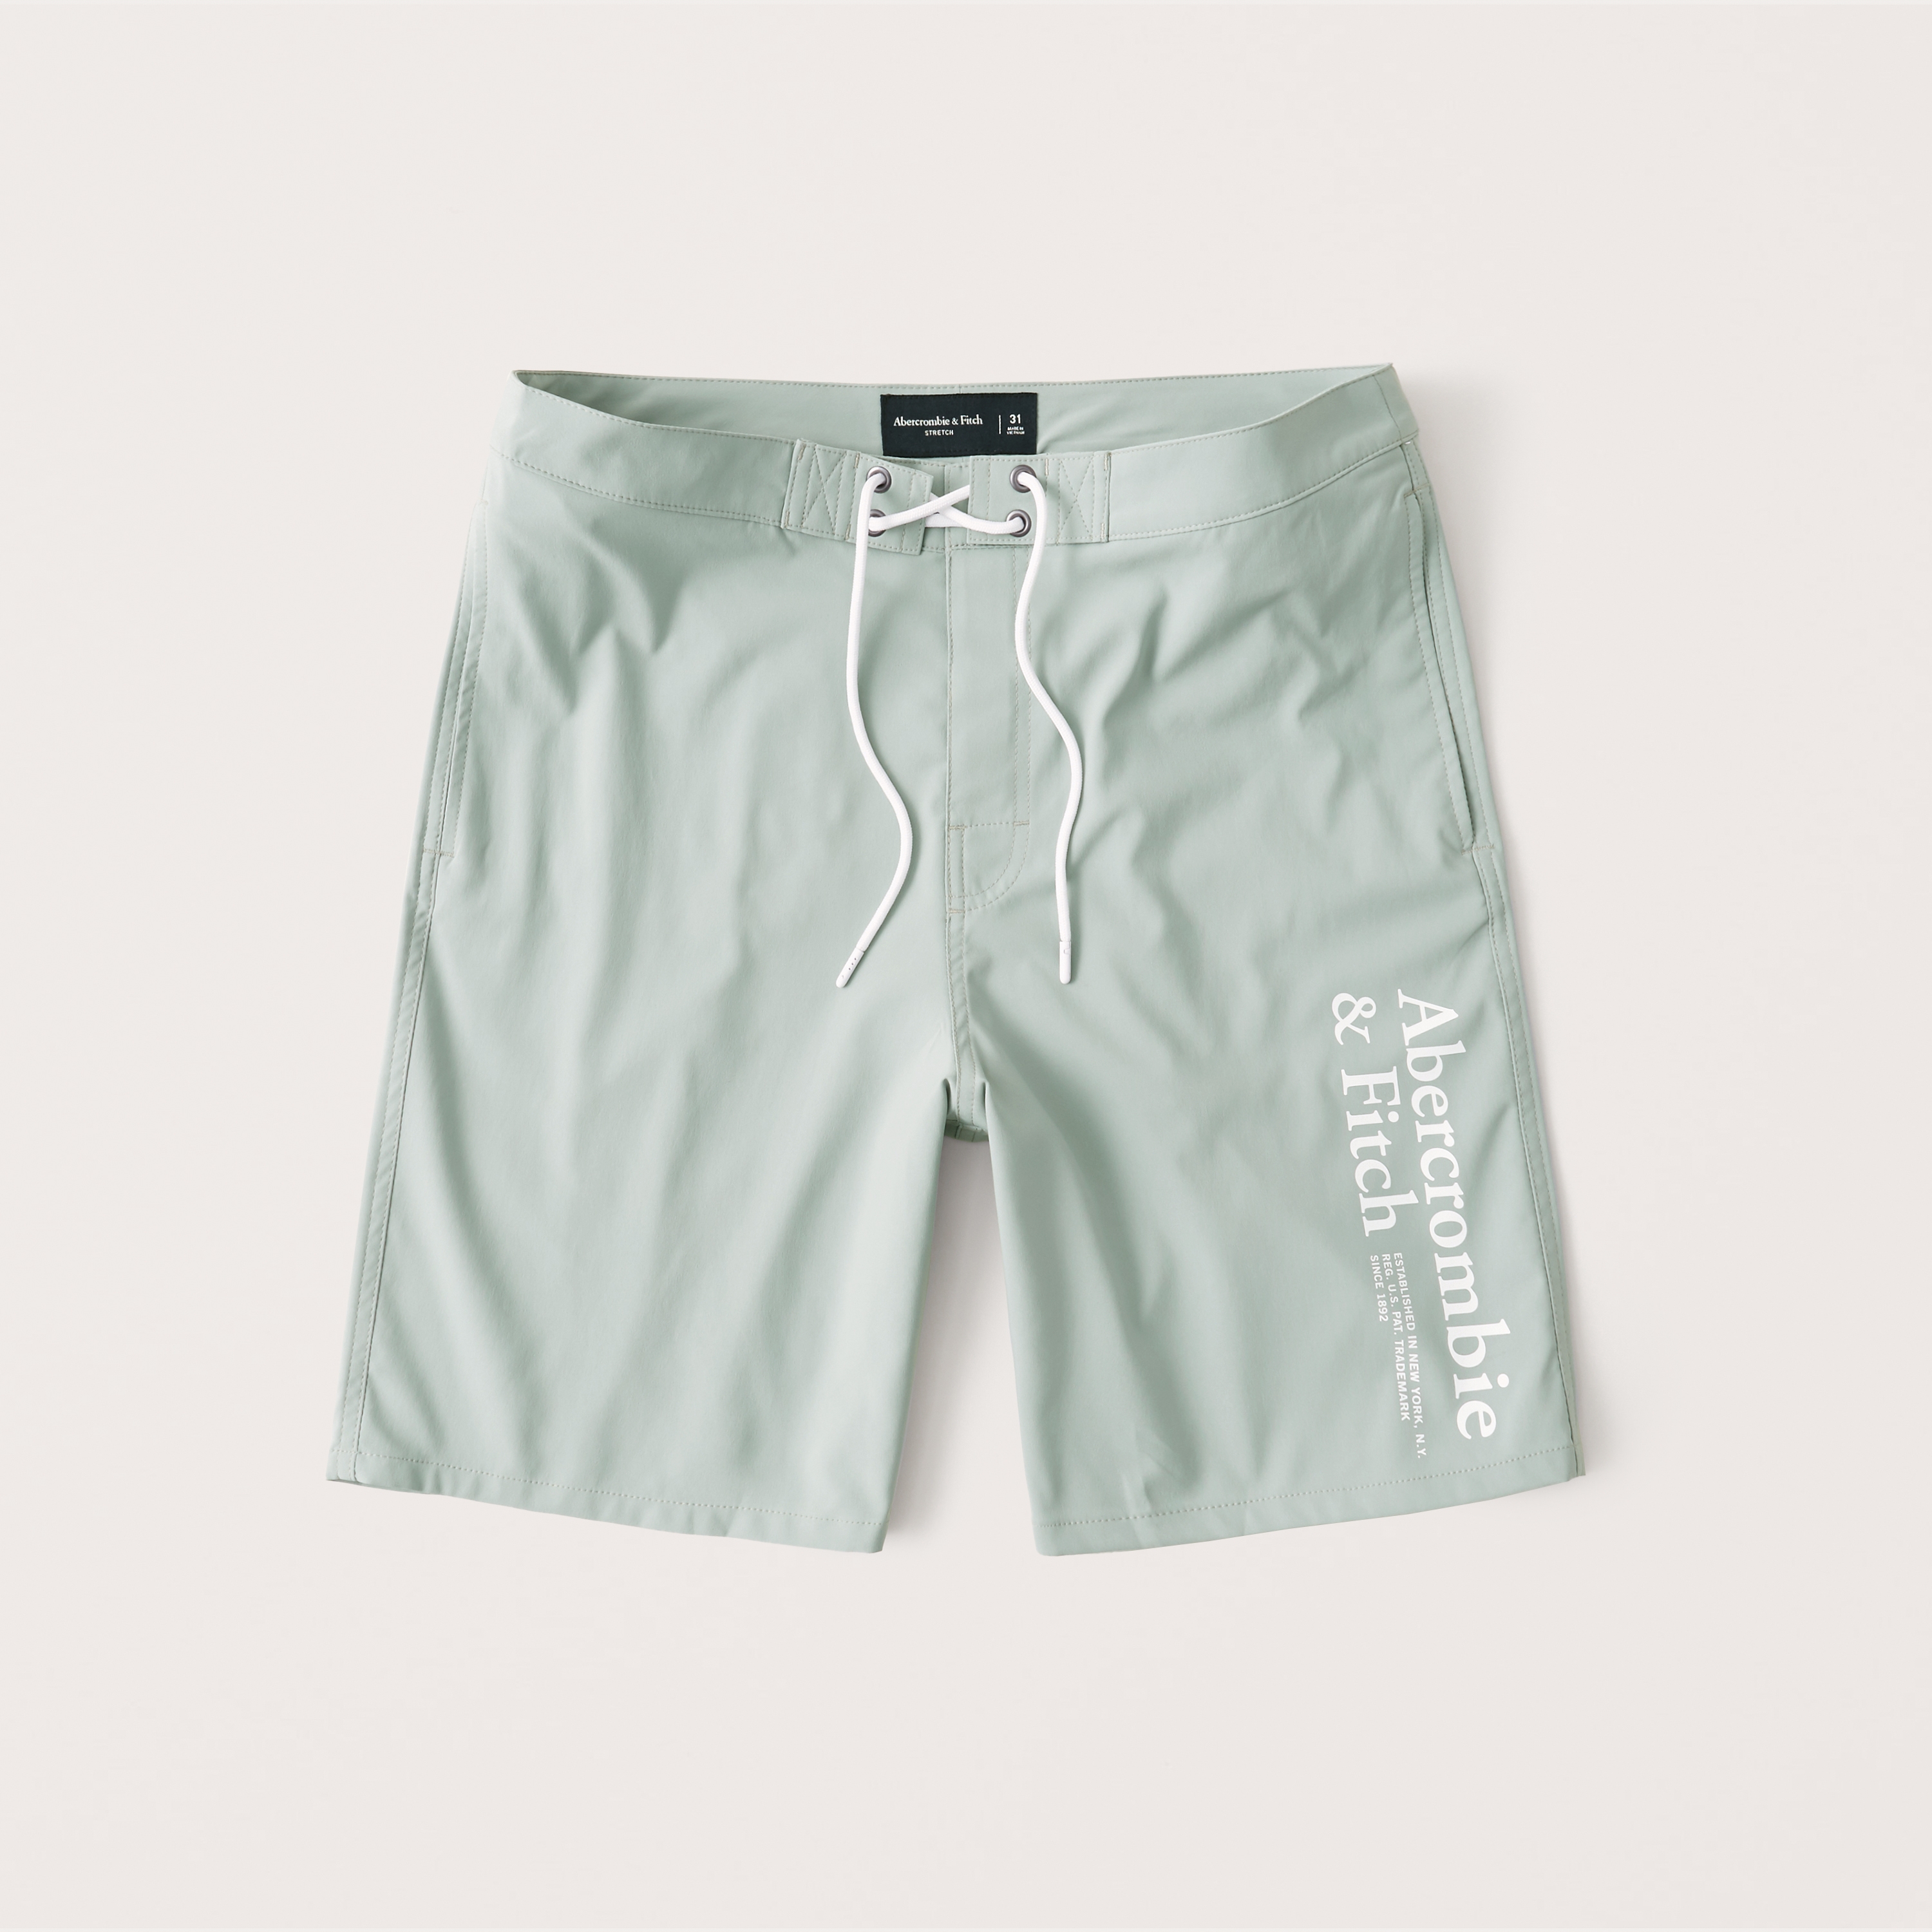 abercrombie board shorts